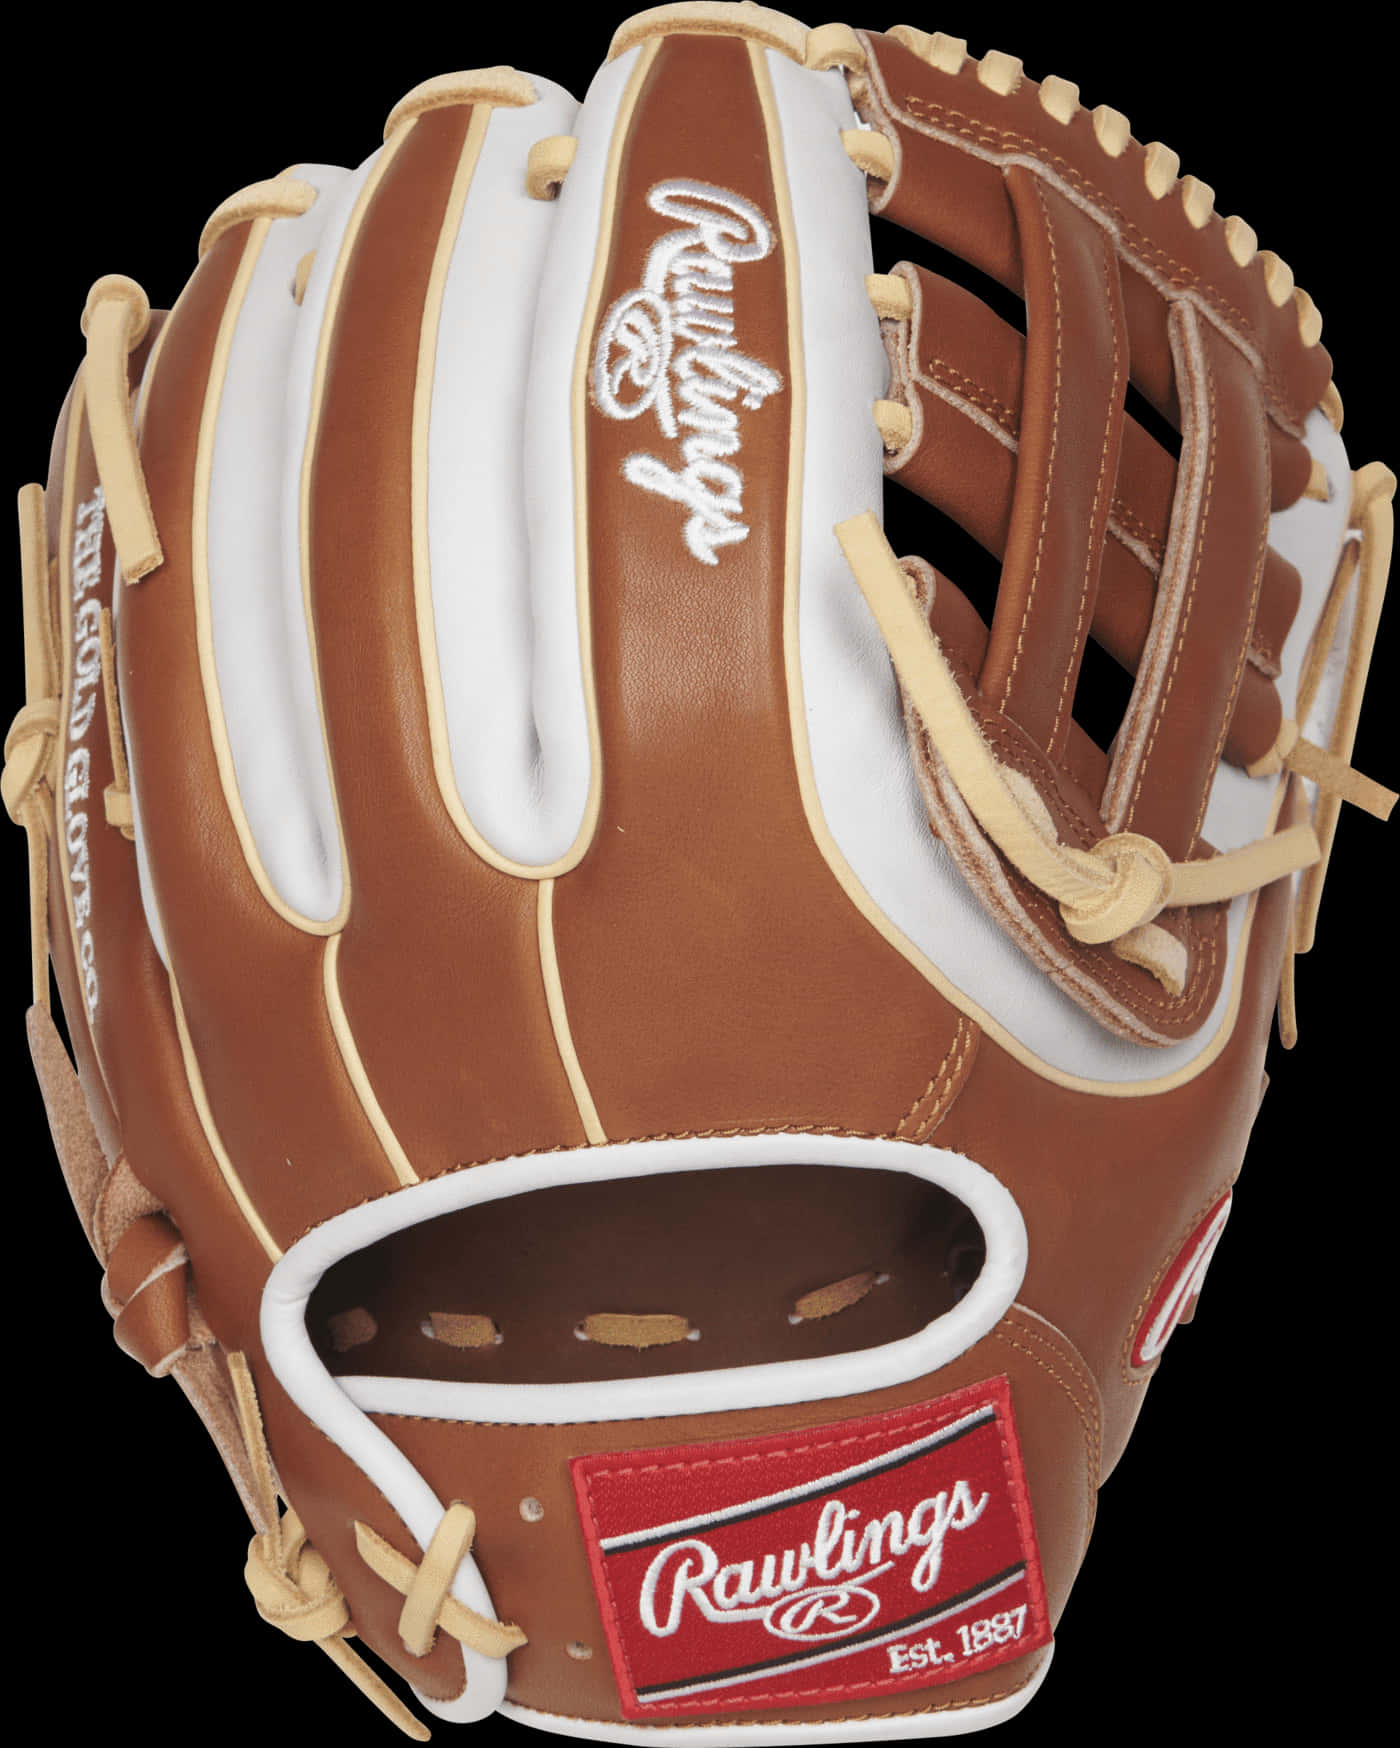 Rawlings Leather Baseball Glove PNG